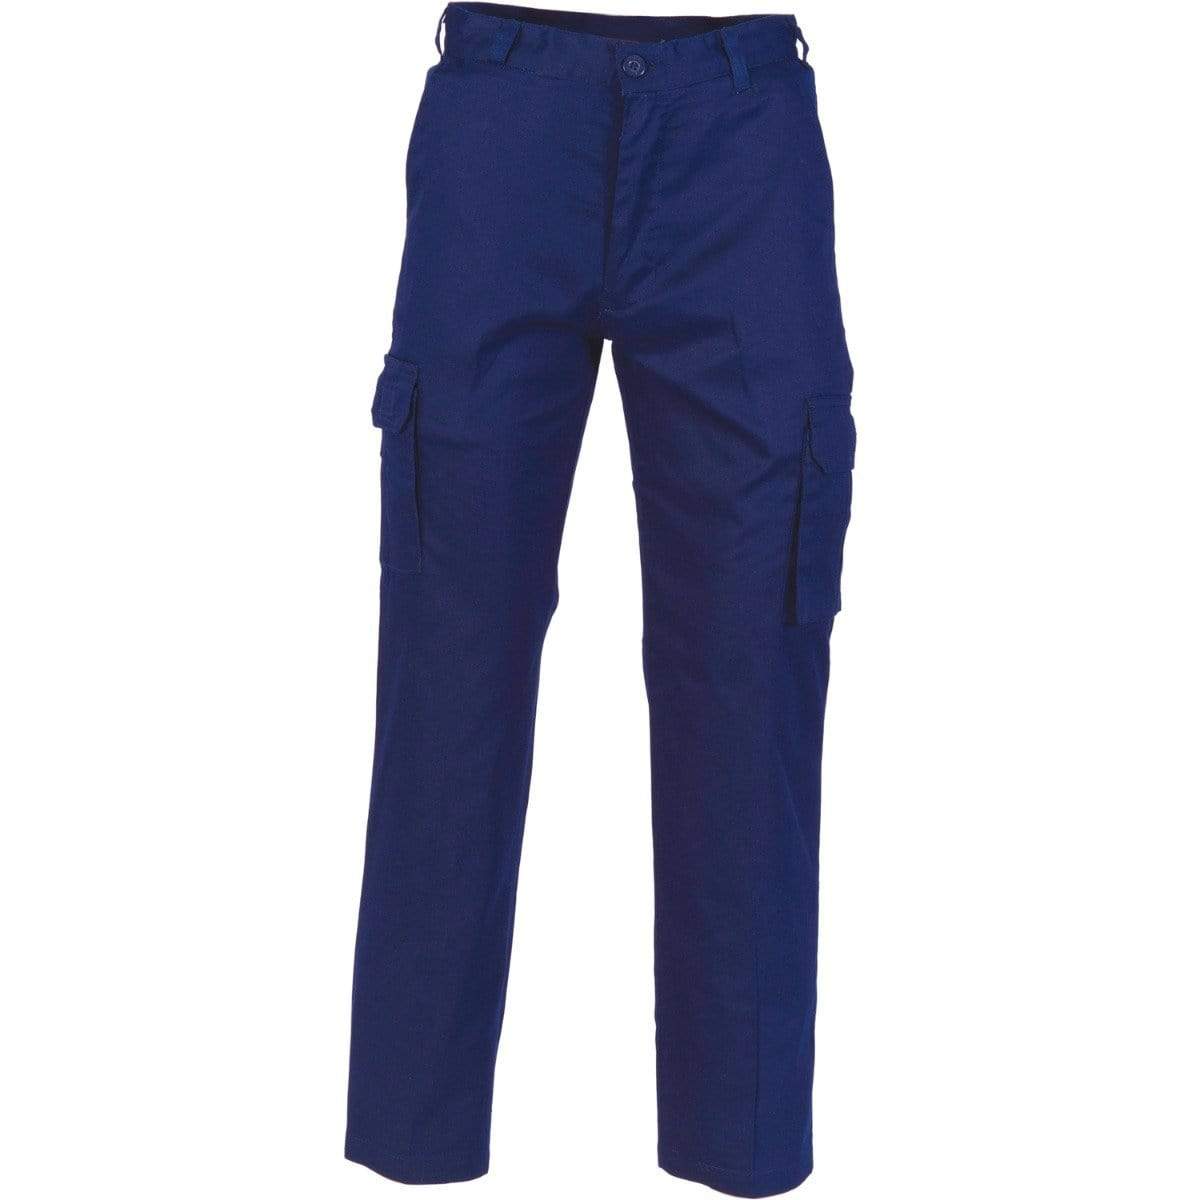 Dnc Workwear Lightweight Cotton Cargo Pants - 3316 Work Wear DNC Workwear Navy 72R 